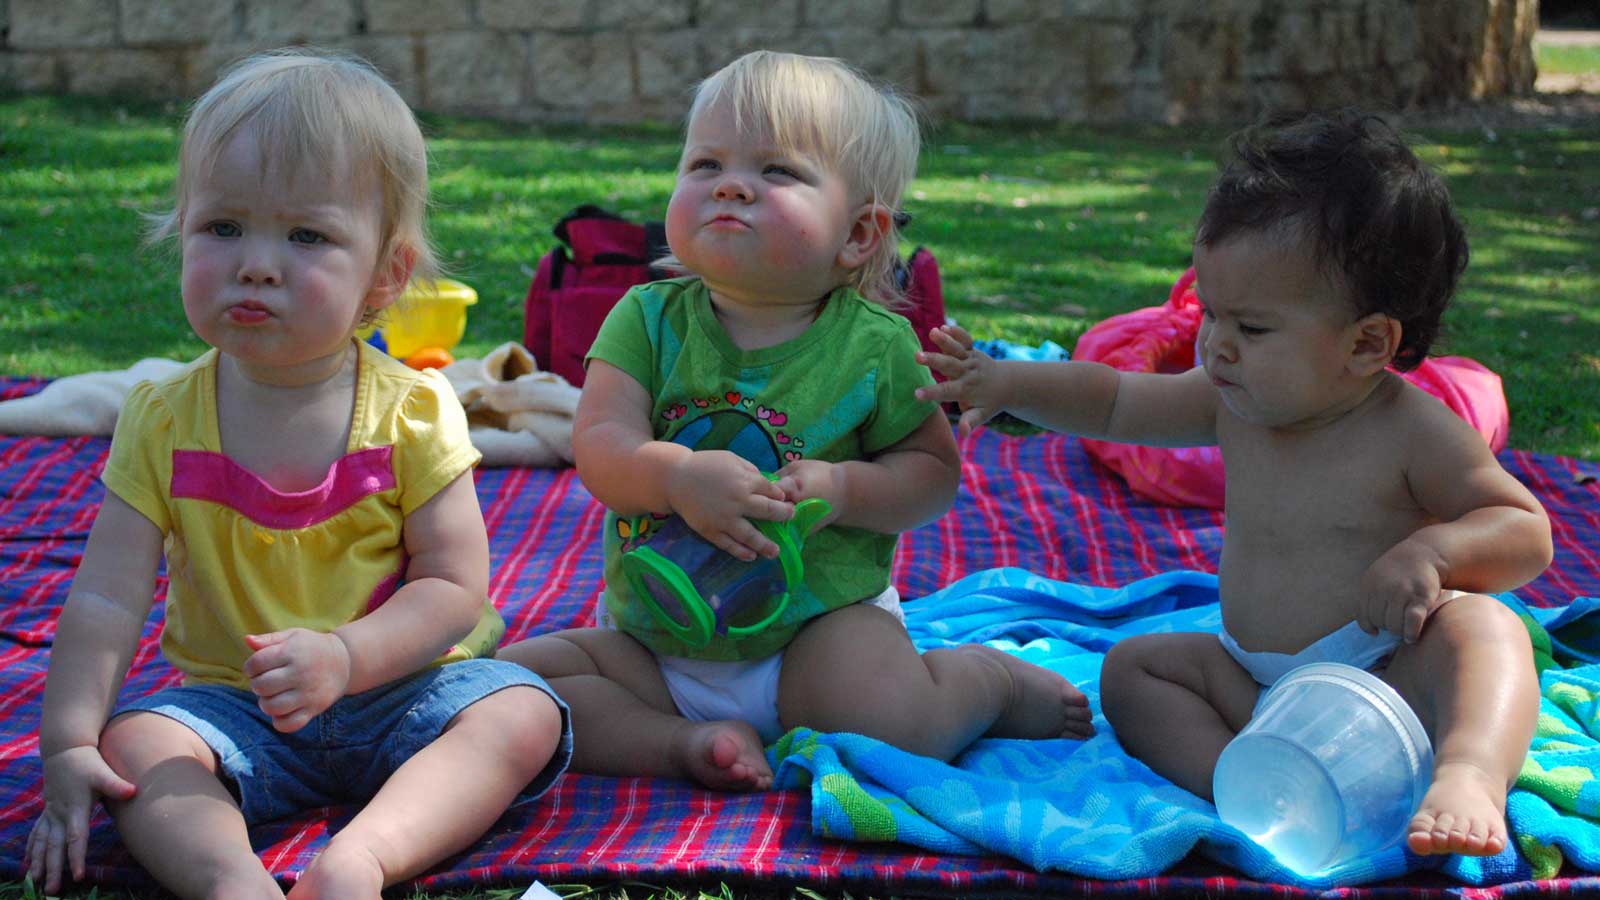 Emily, Jillian, and Aly enjoying snacks on a picnic blanket